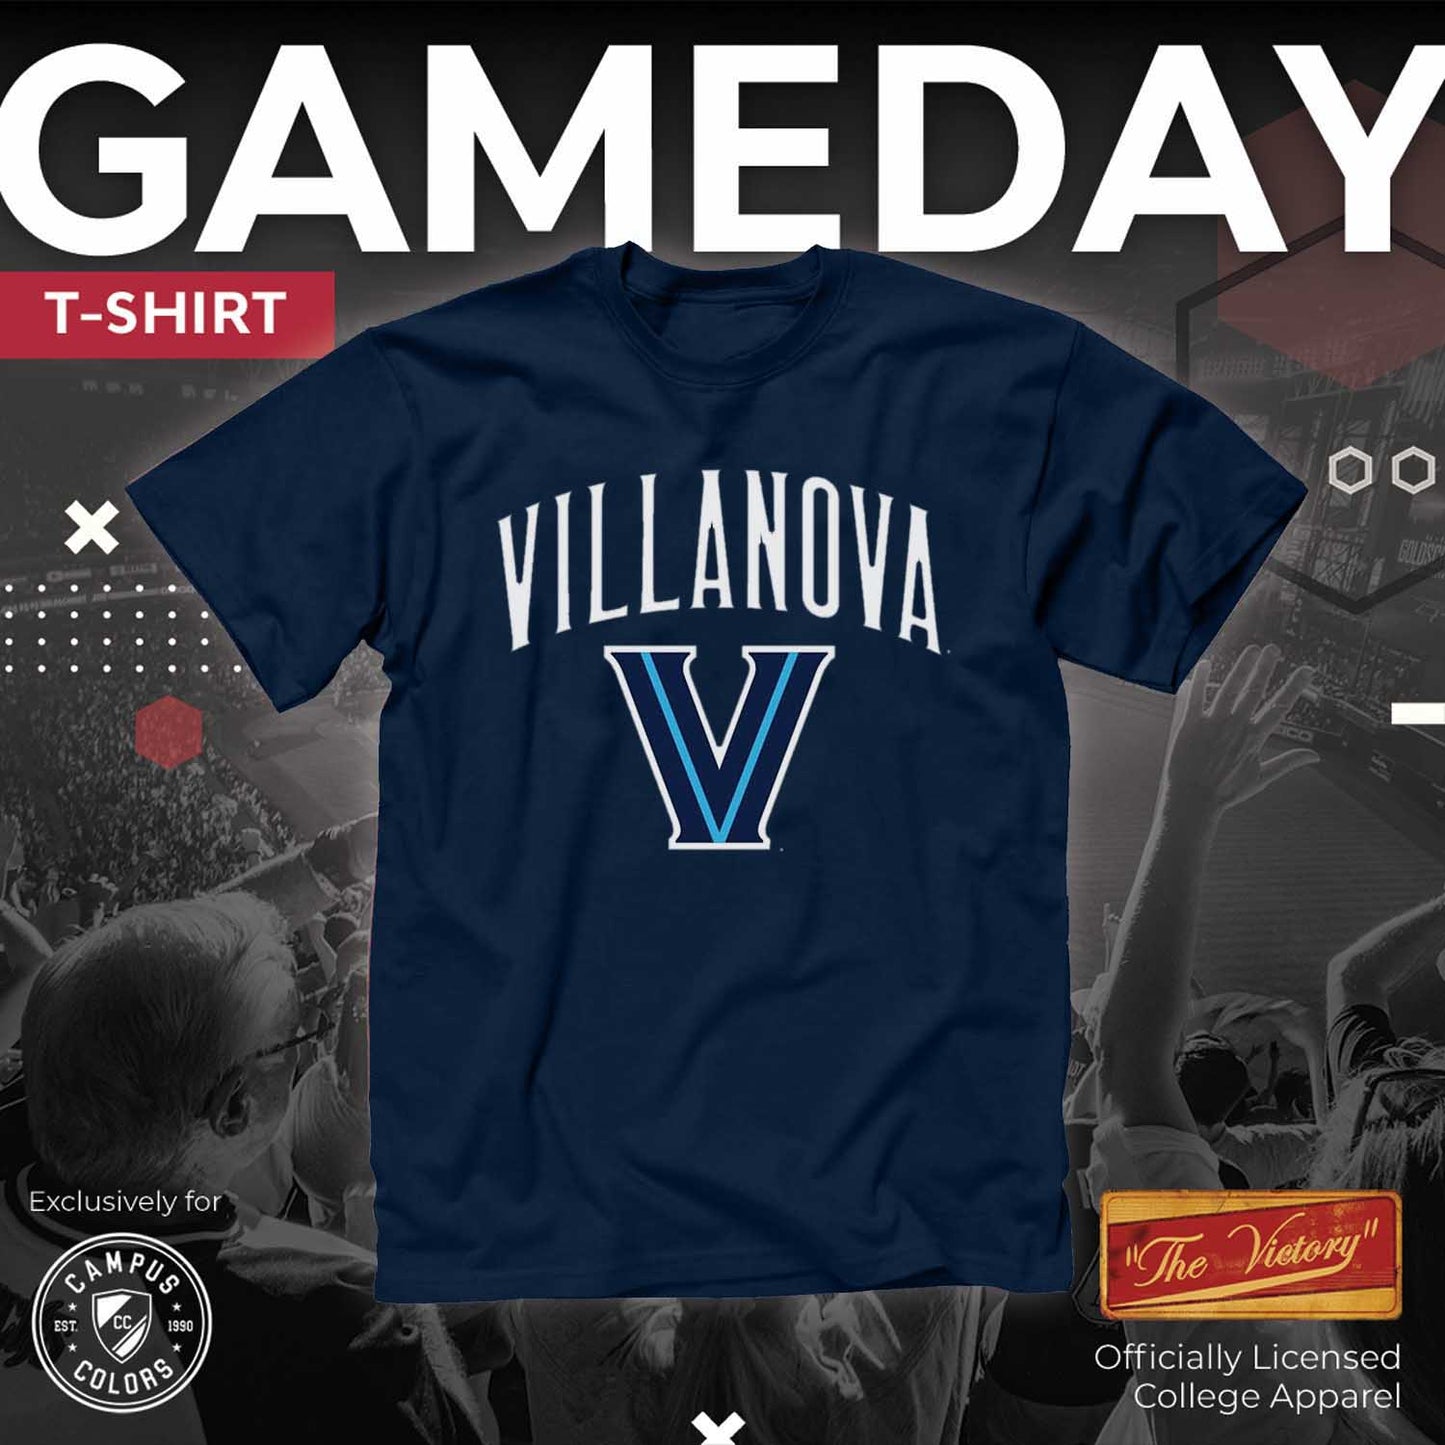 Villanova Wildcats NCAA Adult Gameday Cotton T-Shirt - Navy